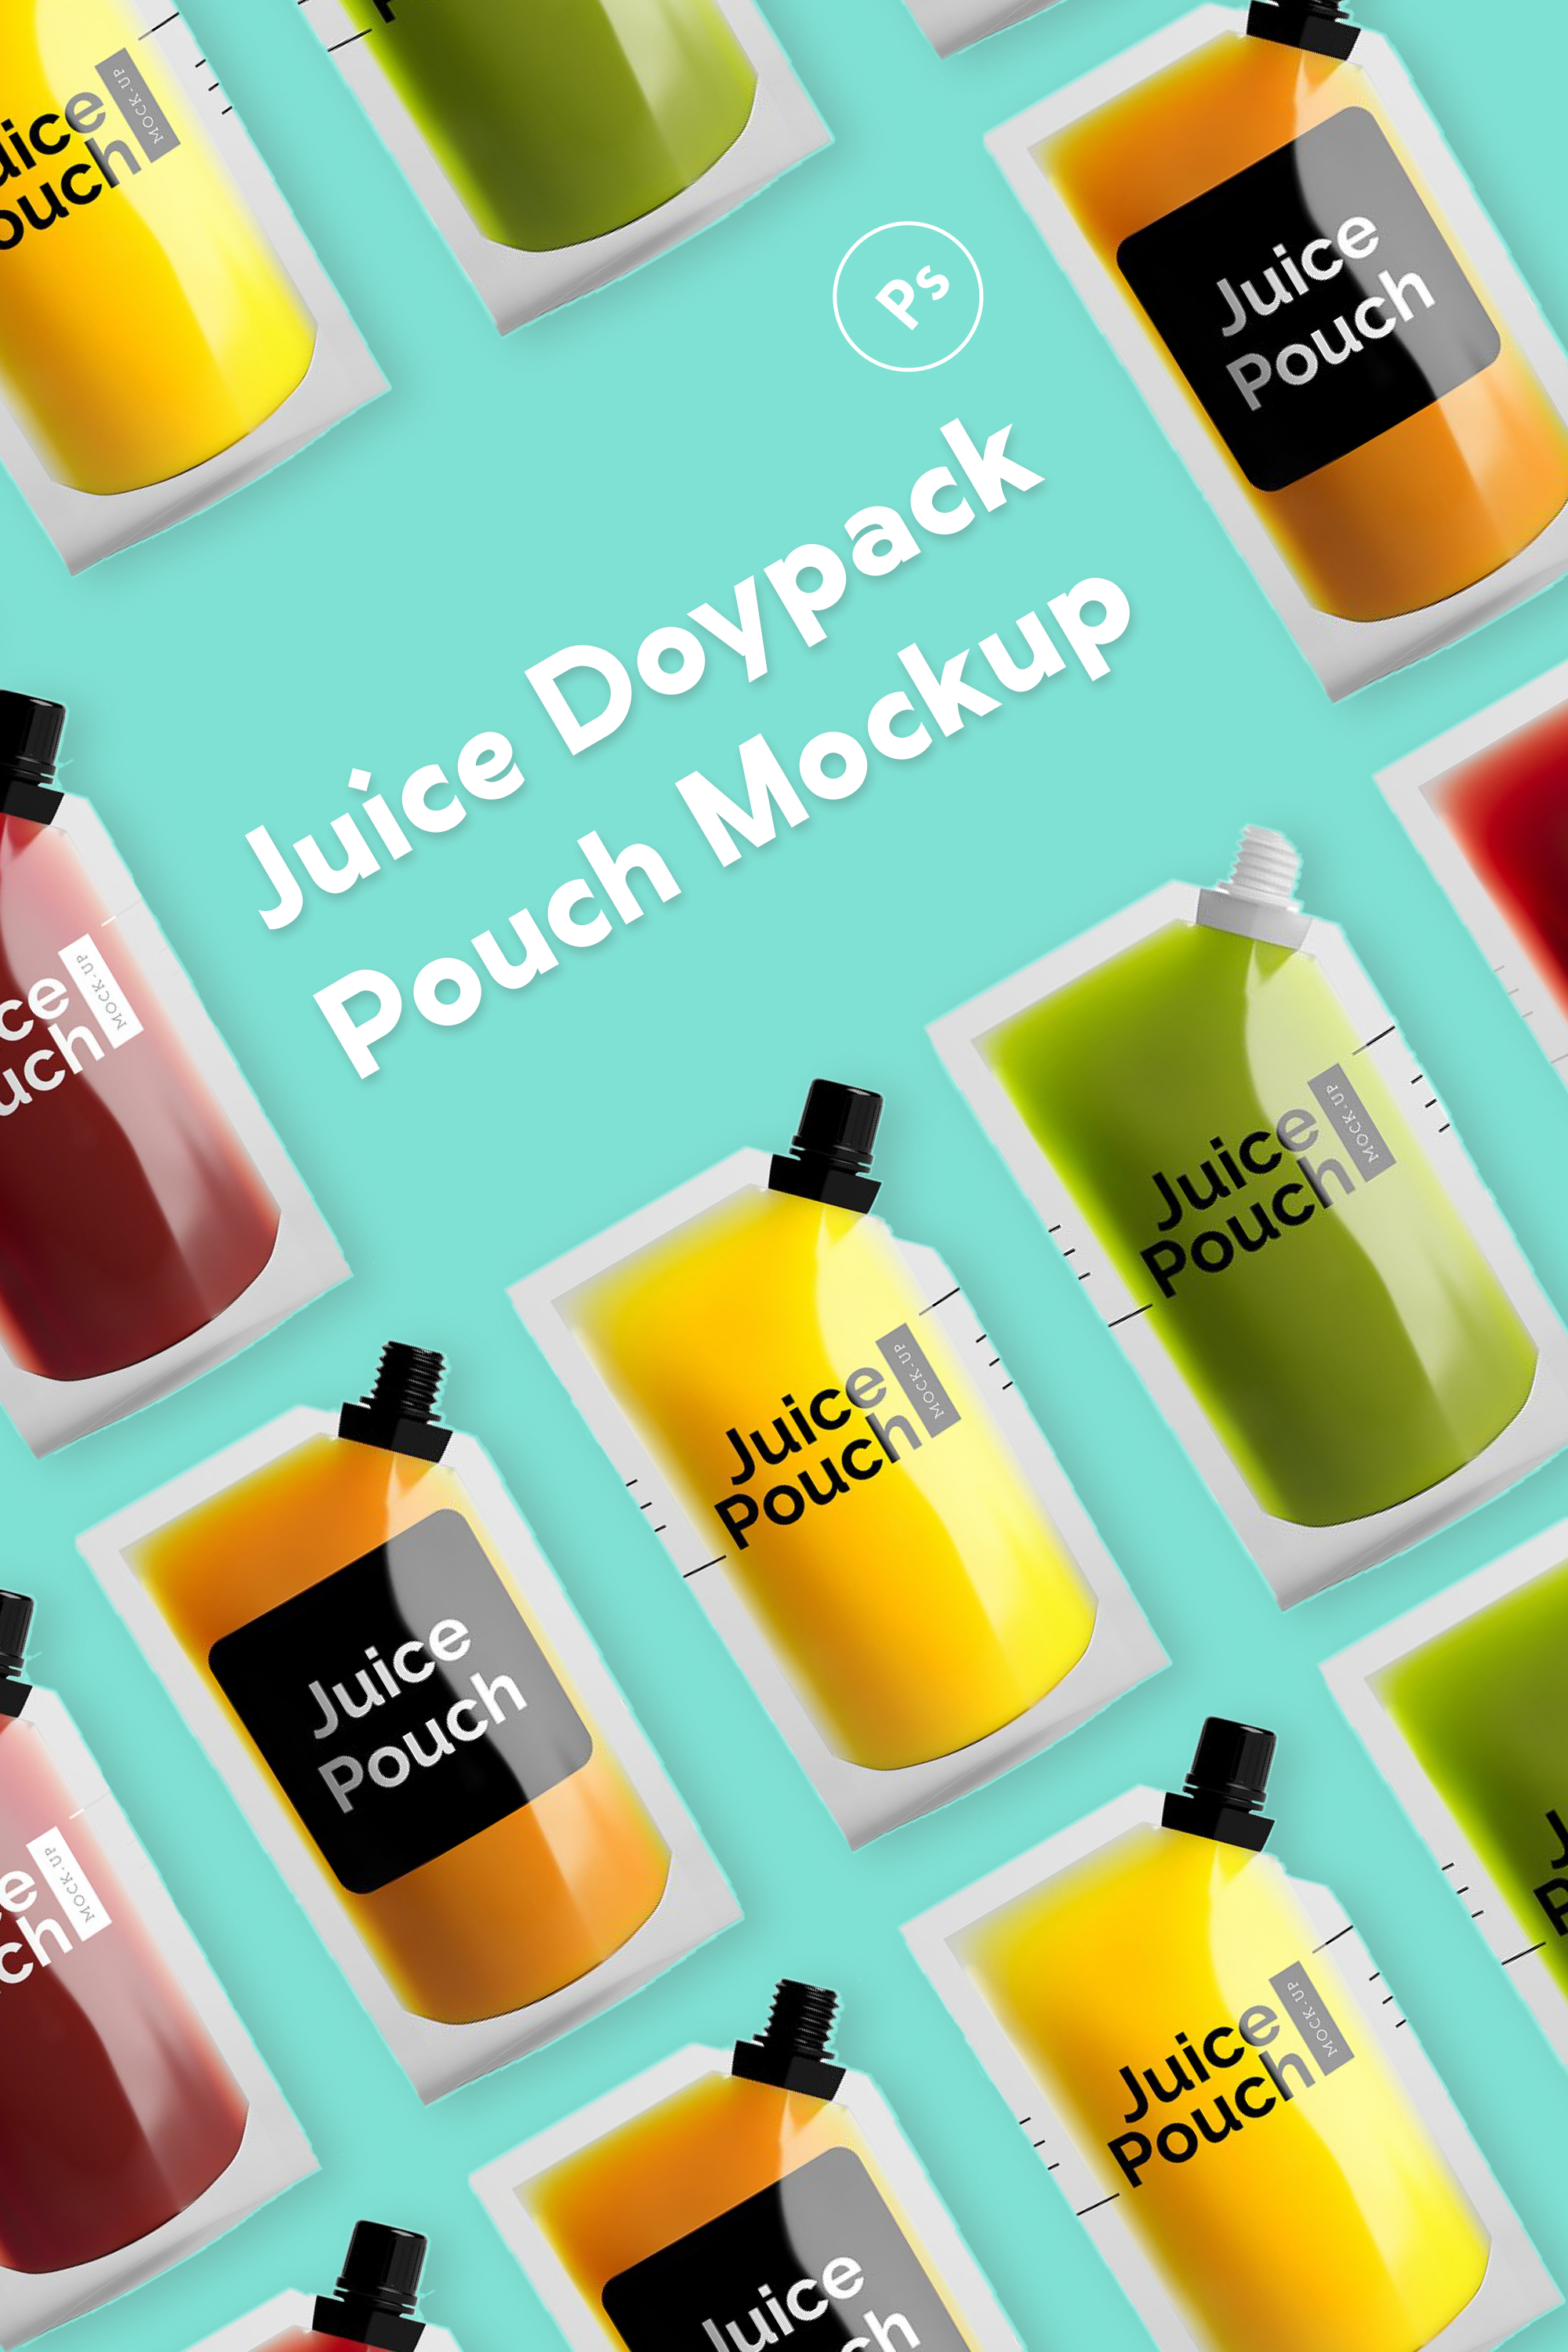 Juice doypack pouch mockup pinterest.